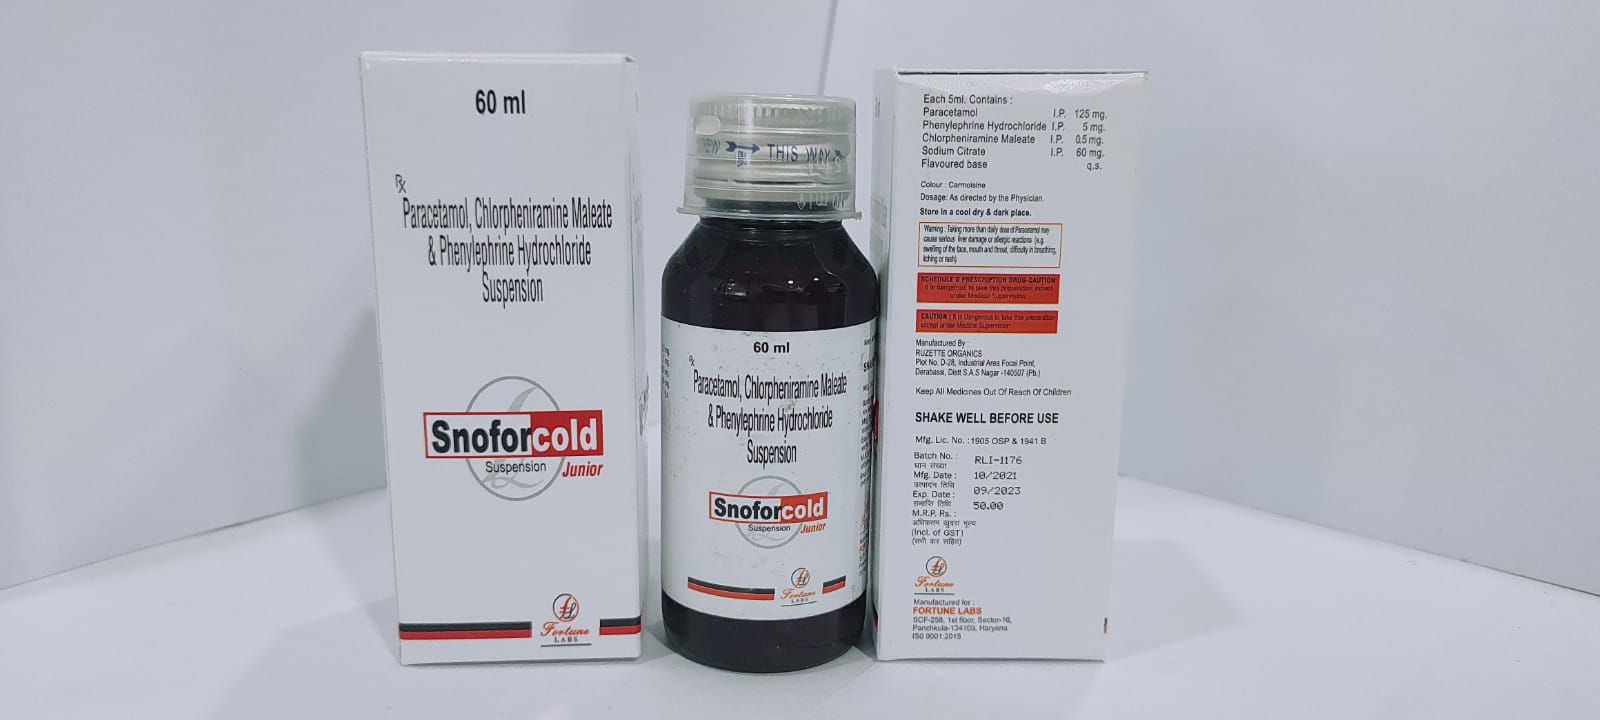 paracetamol  125mg + cpm 0.5mg + phenylpherine 5mg + sodium citrate 60 mg